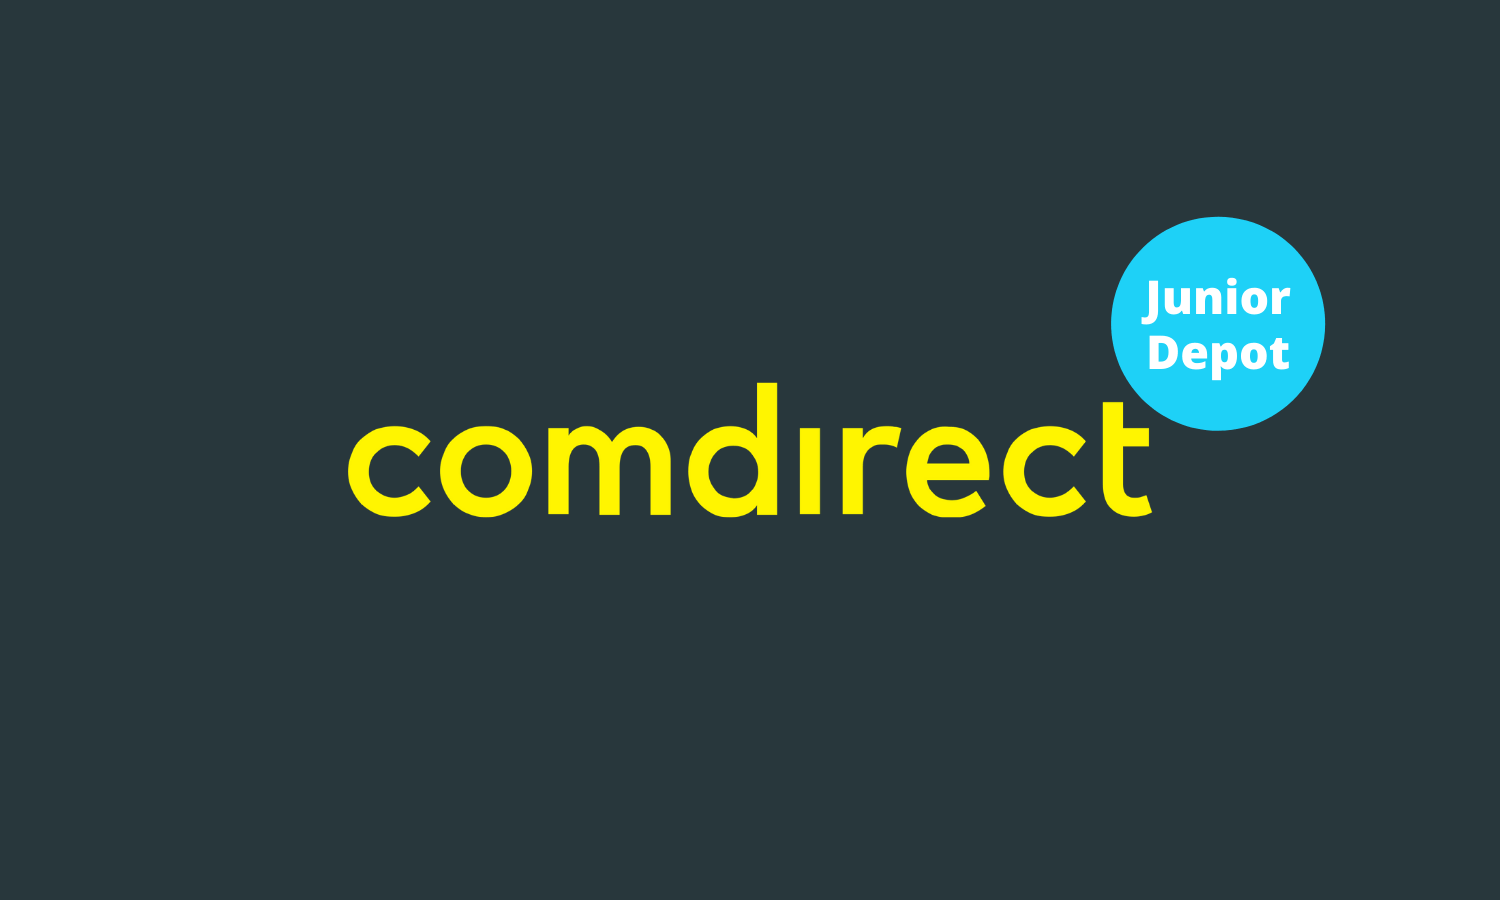 comdirect Junior Depot